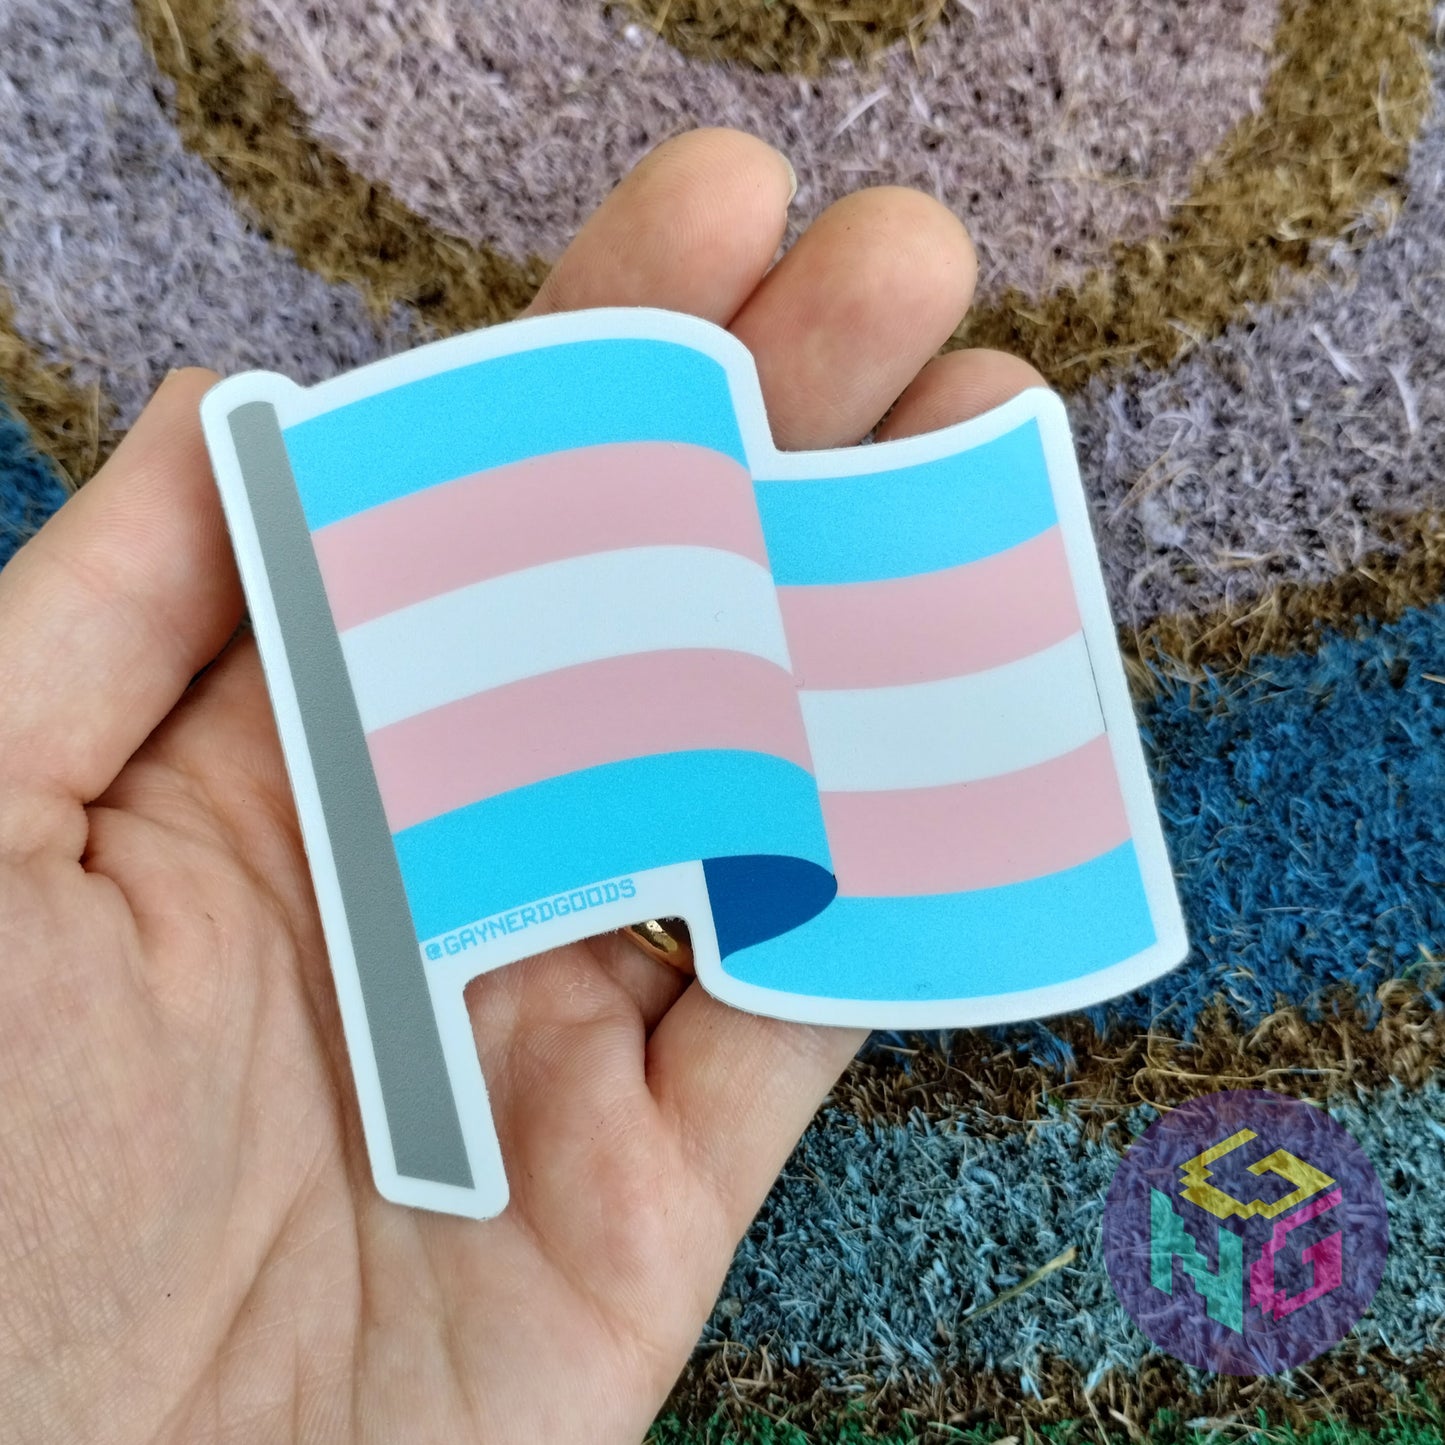 vinyl transgender flag sticker held in hand against rainbow welcome mat